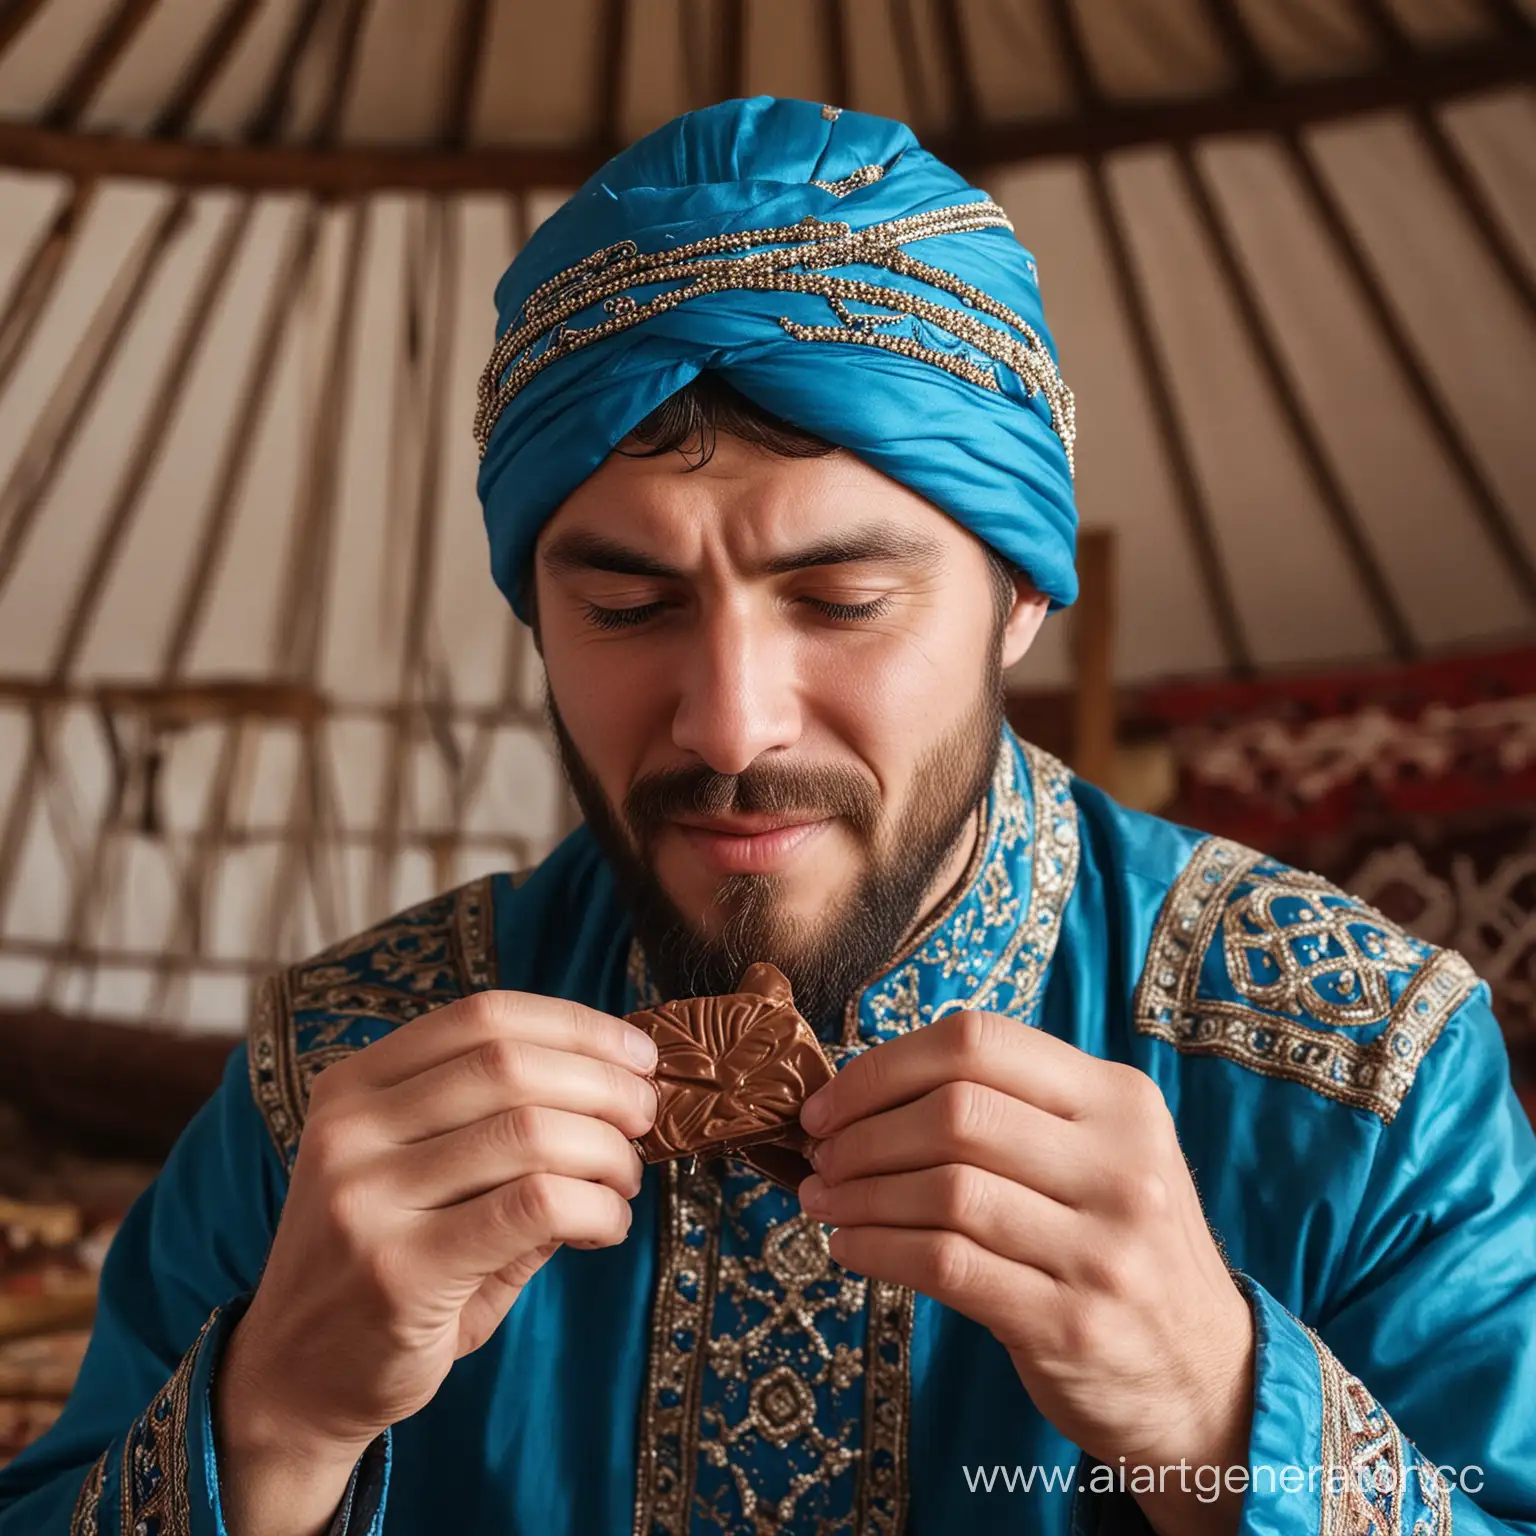 Kazakh-Man-Enjoying-Chocolate-in-Ornamented-Yurt-Interior